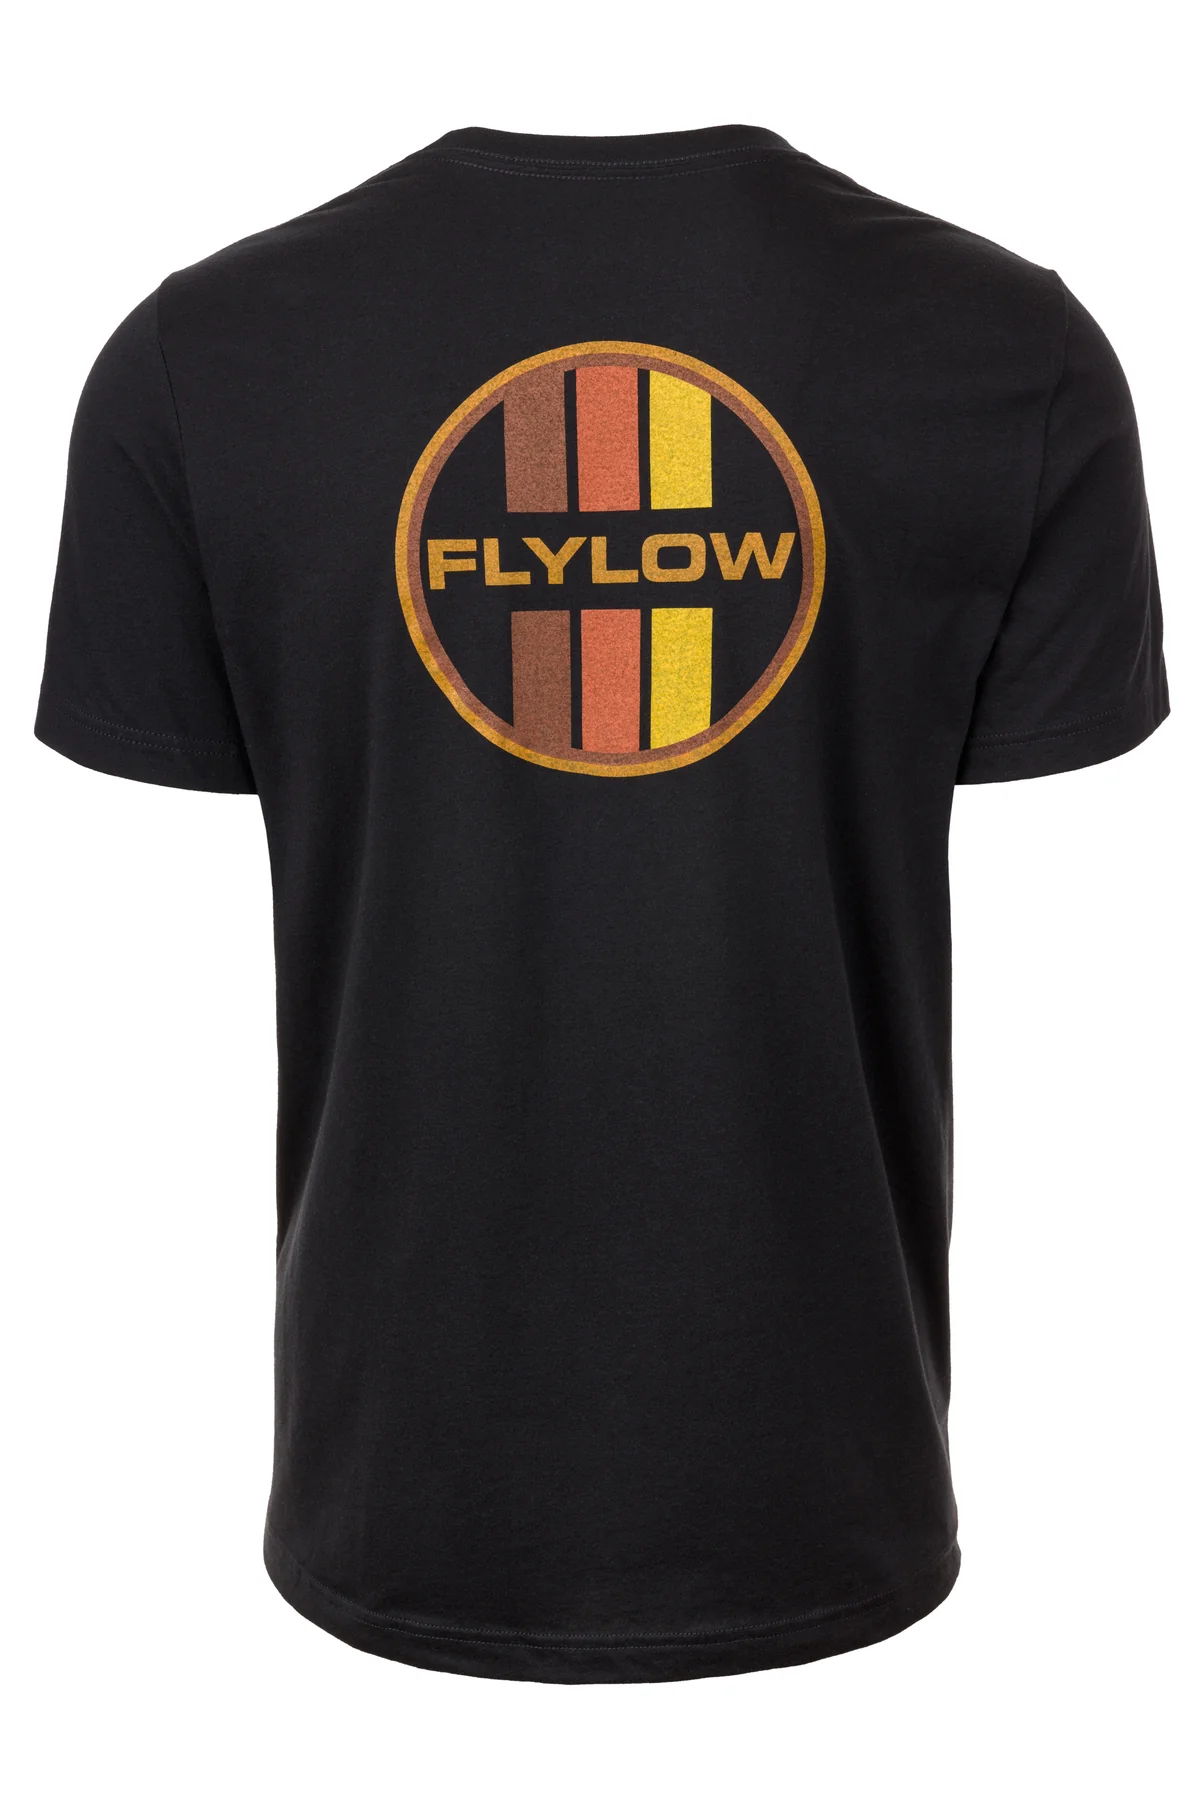 Flylow Gear Surf Logo Tee, Black